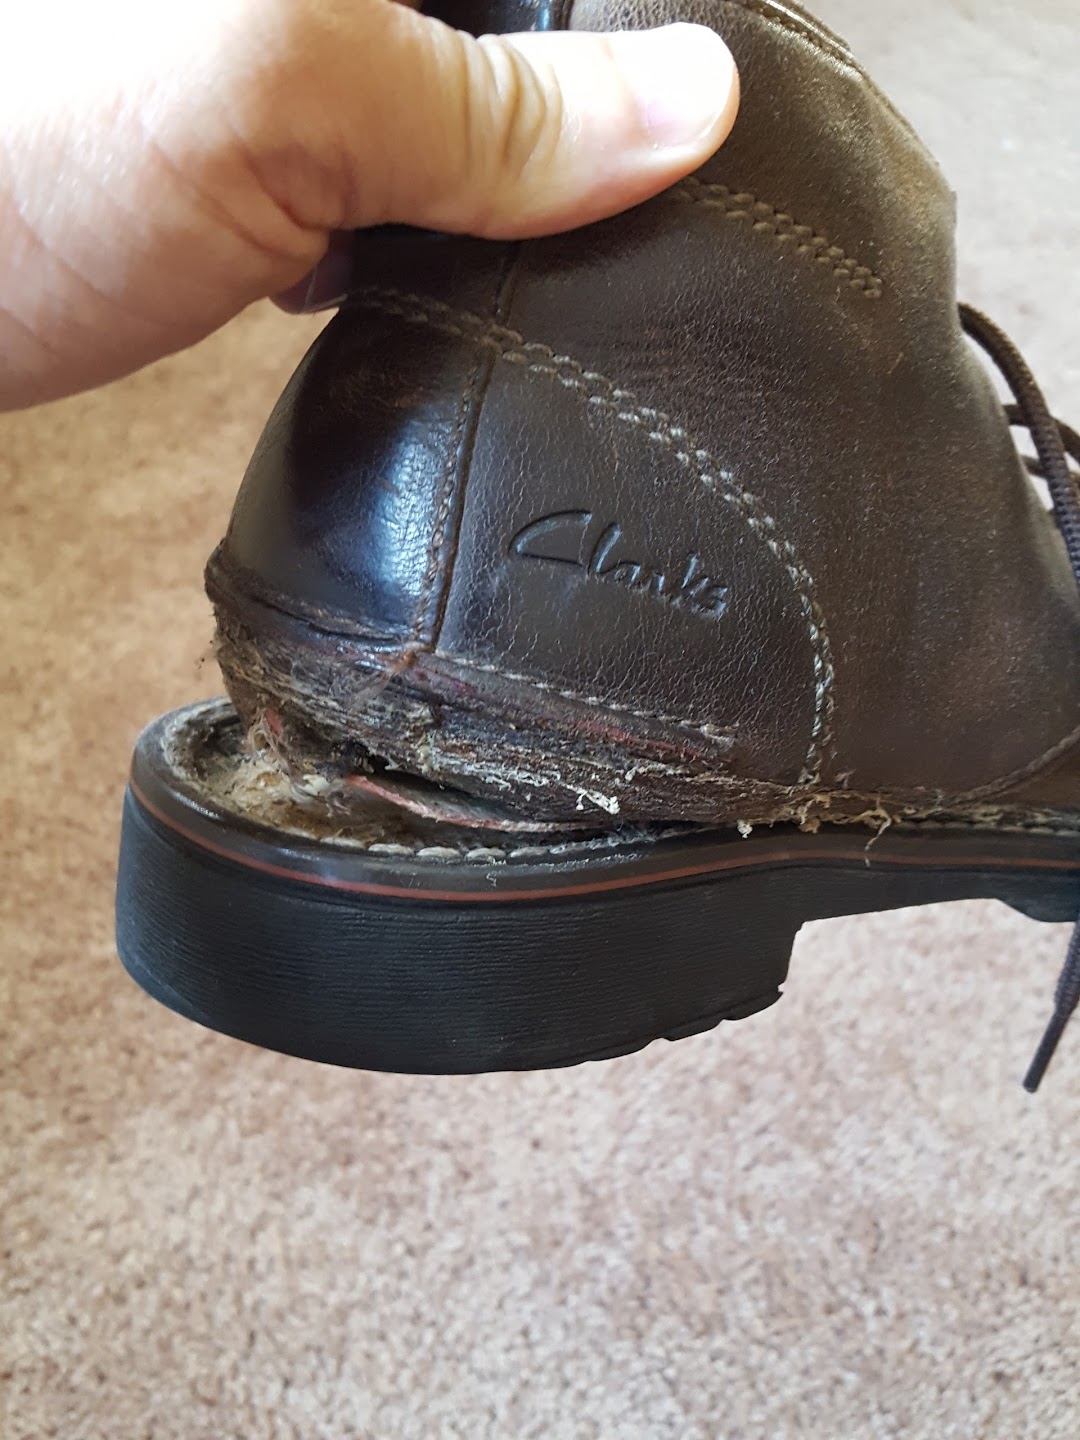 Eddies Shoe Repair